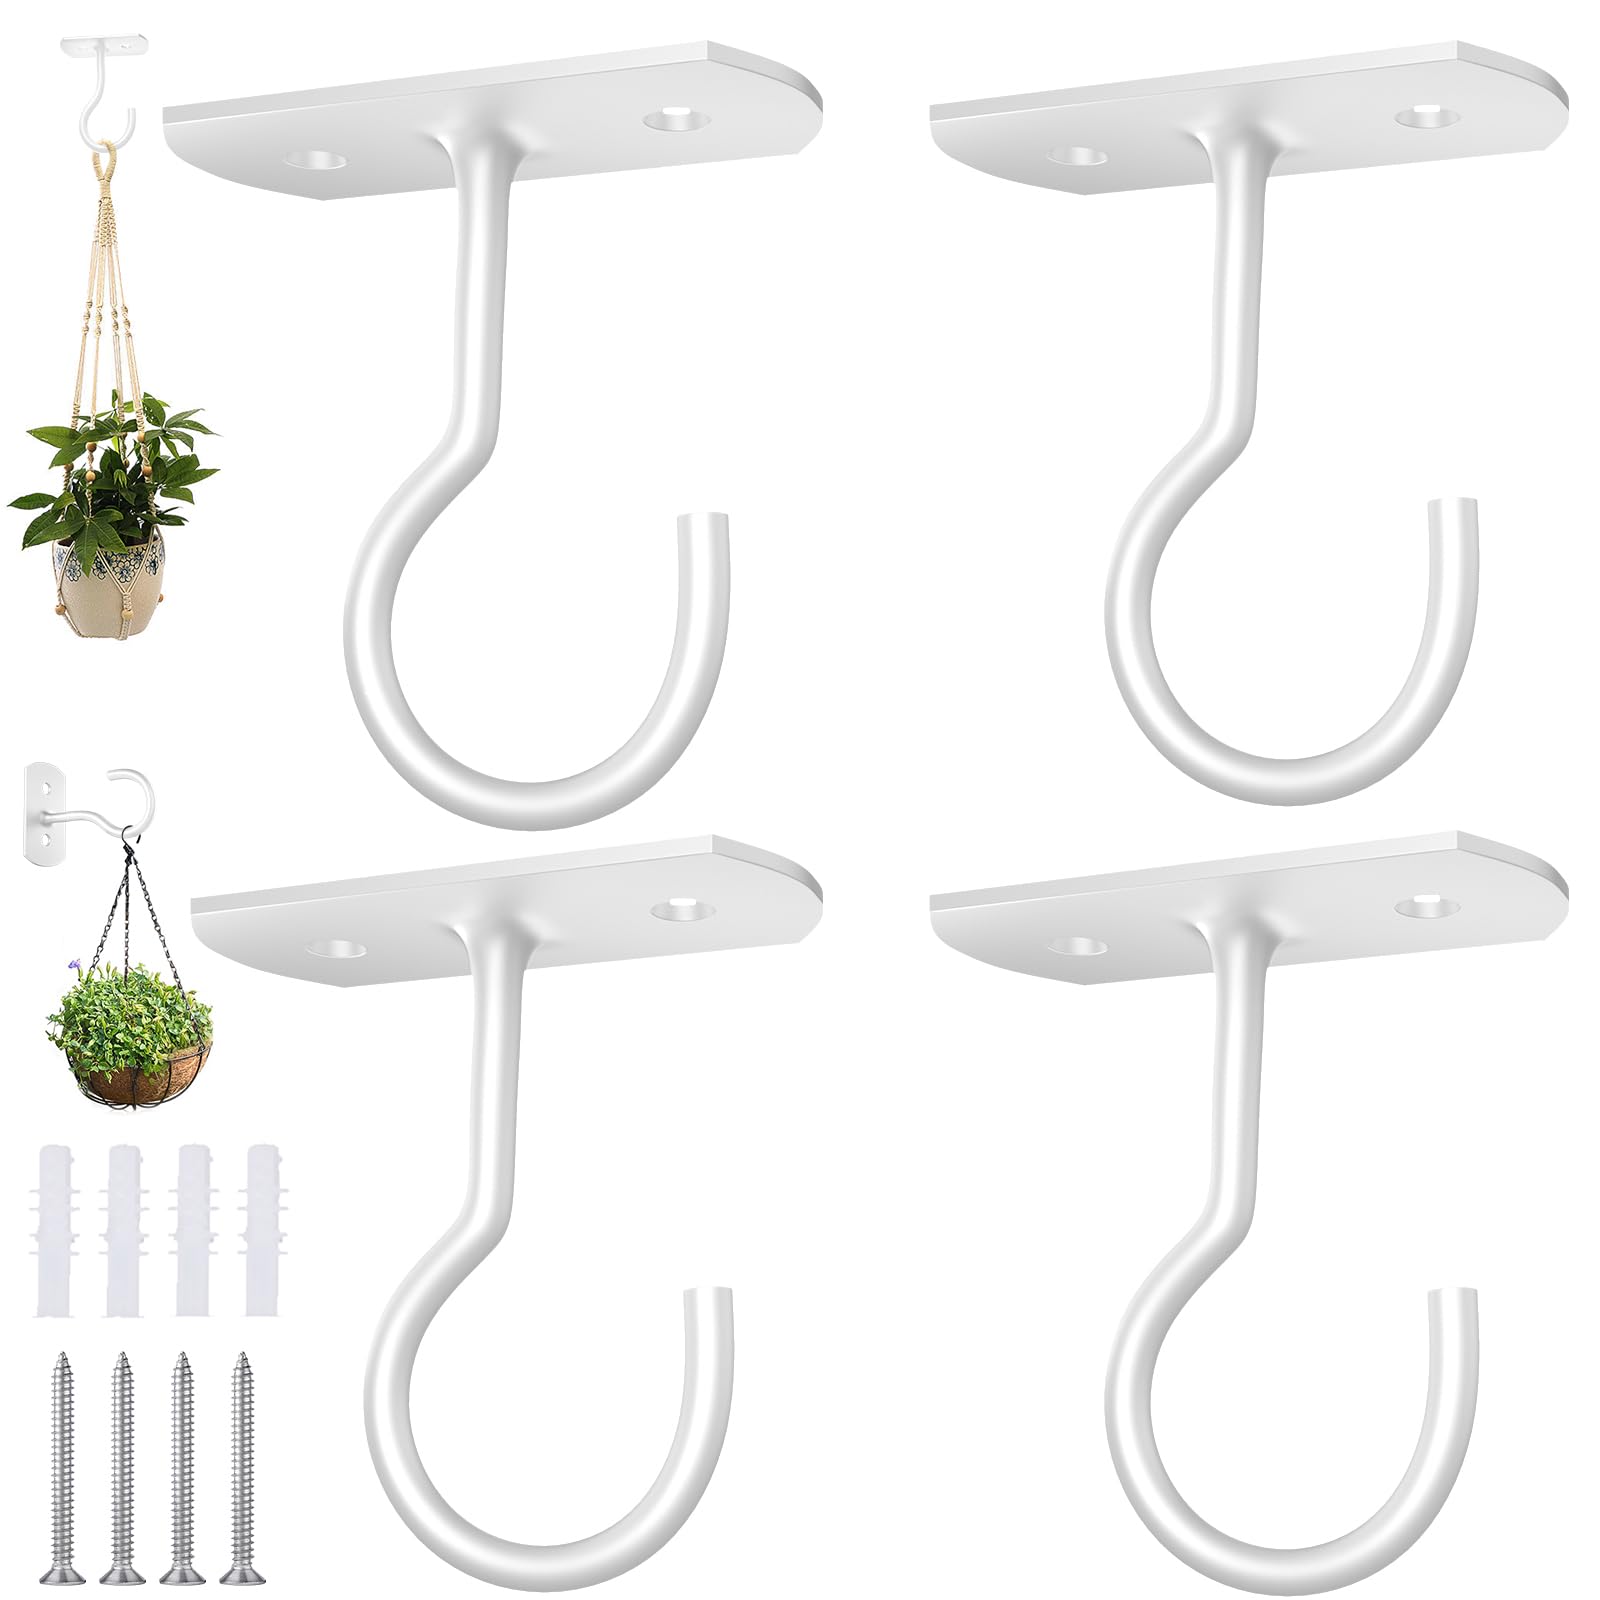 ASZUNE Ceiling Hooks for Hanging Plants - Metal Plant Bracket Iron Wall Mount Lanterns Hangers for Hanging Bird Feeders, Lantern